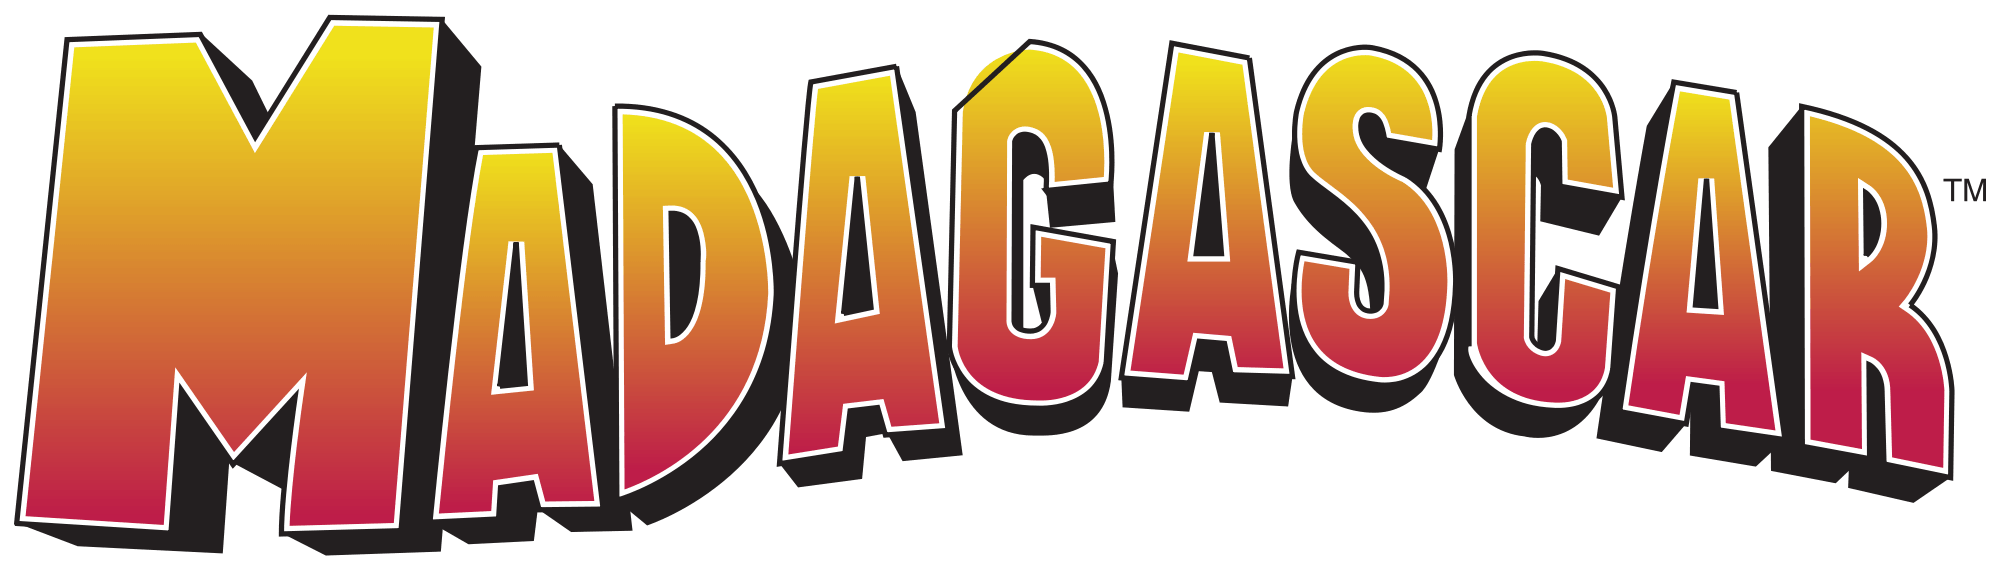 Madagascar Logo - Madagascar logo png 3 » PNG Image